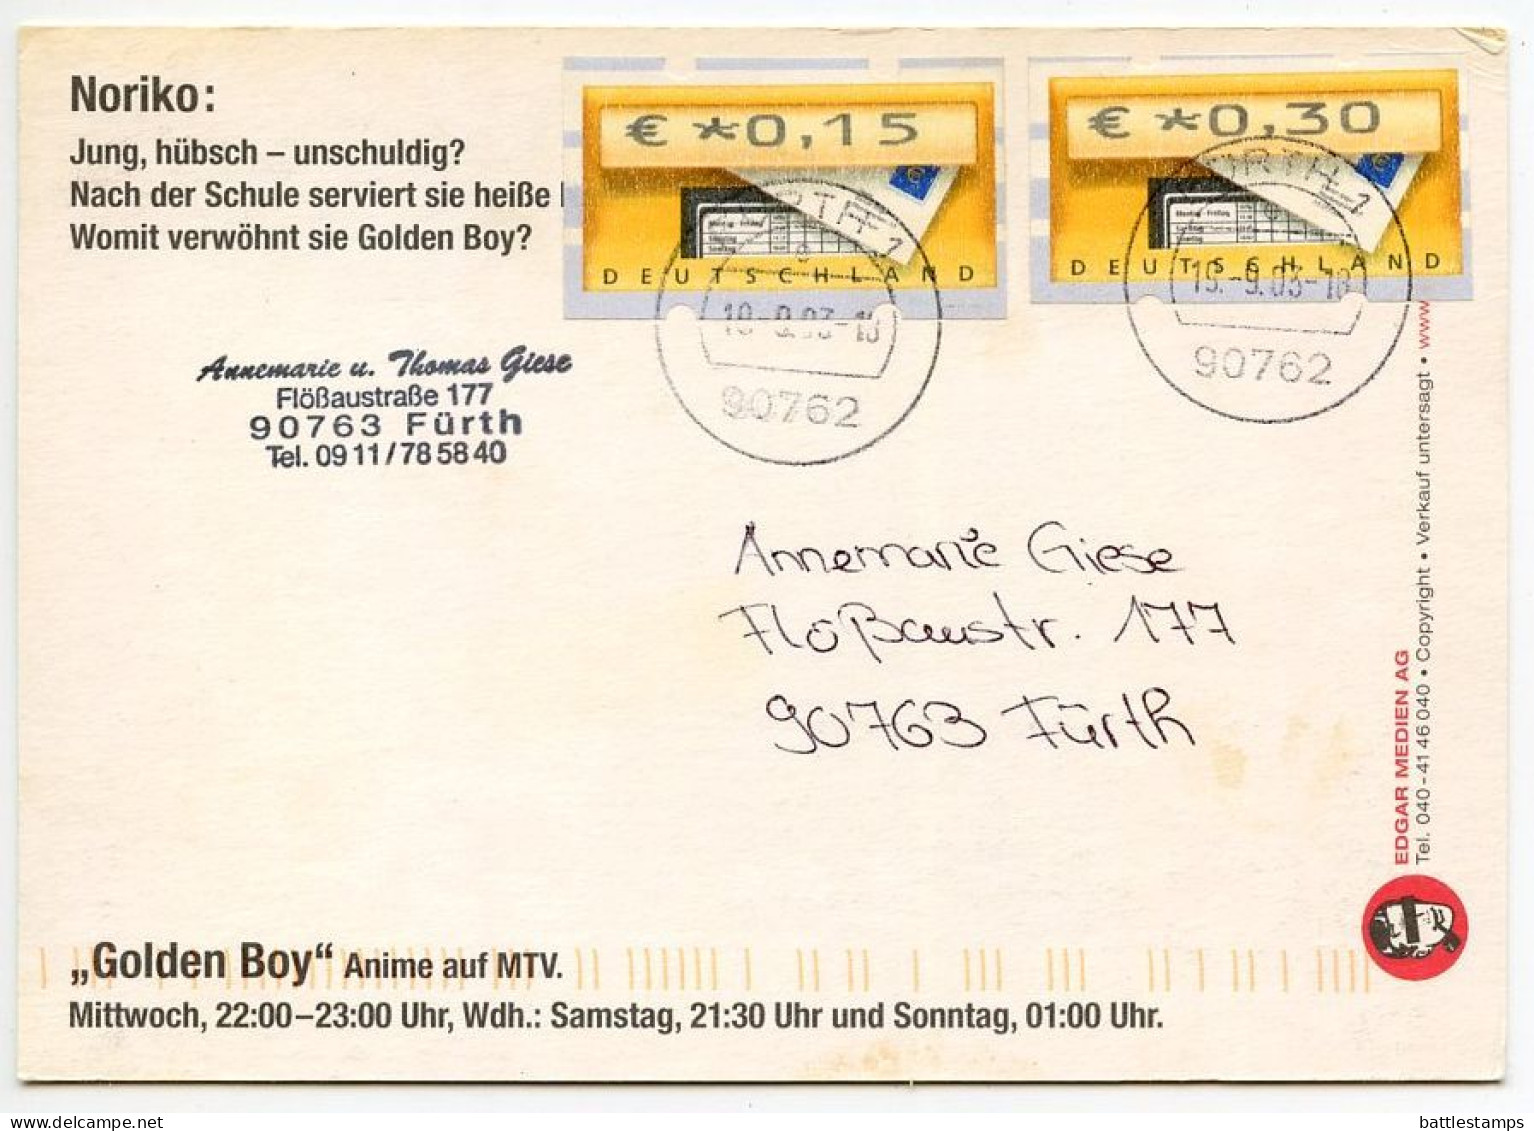 Germany 2003 Postcard Golden Boy, Noriko - Anime On MTV; Fürth Postmarks; 15c. & 30c. ATM / Frama Stamps - TV Series